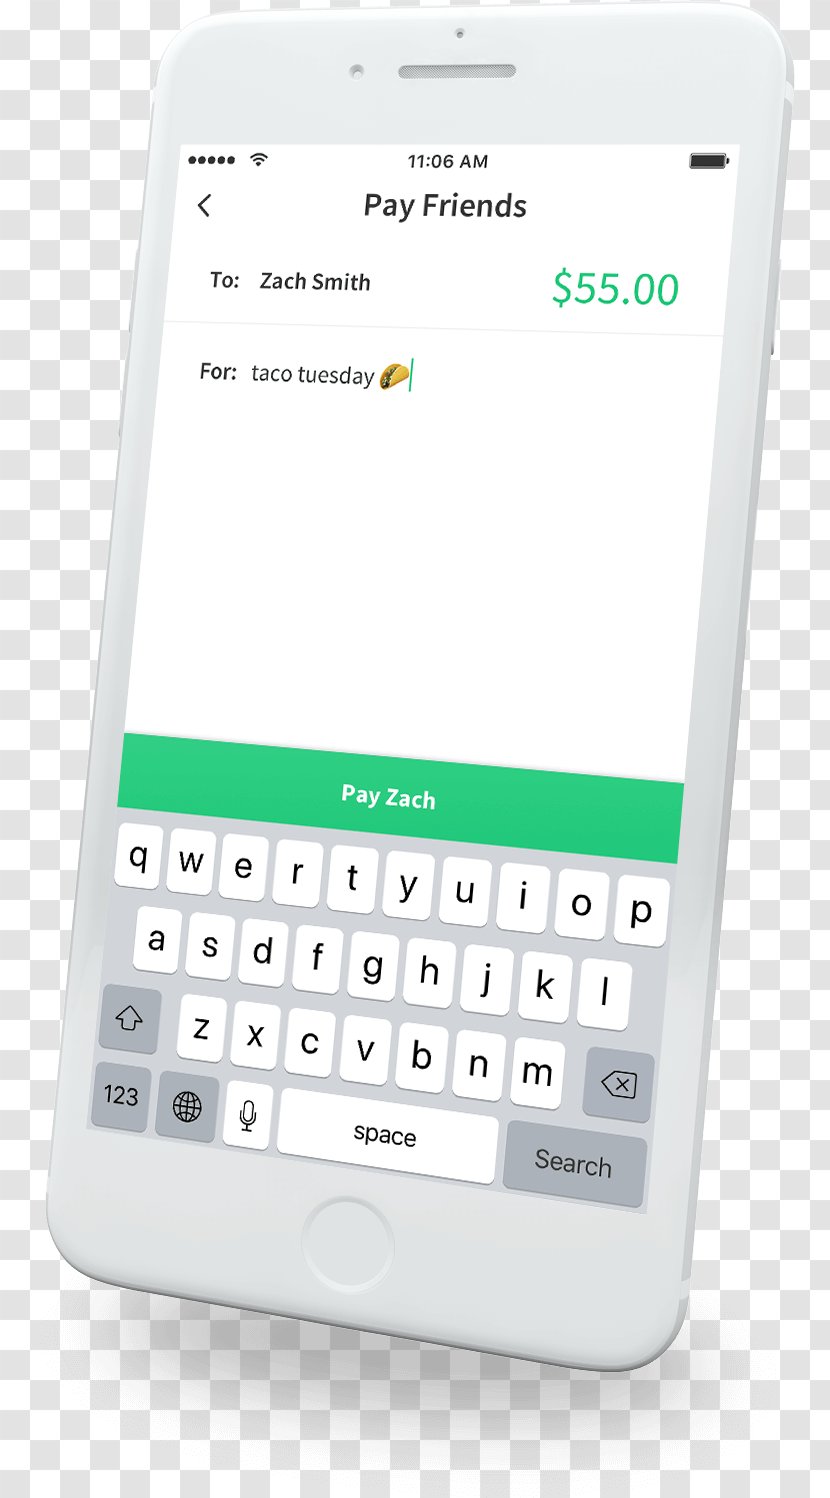 Feature Phone Smartphone App Store User Interface - Amazon Appstore - External Sending Card Transparent PNG